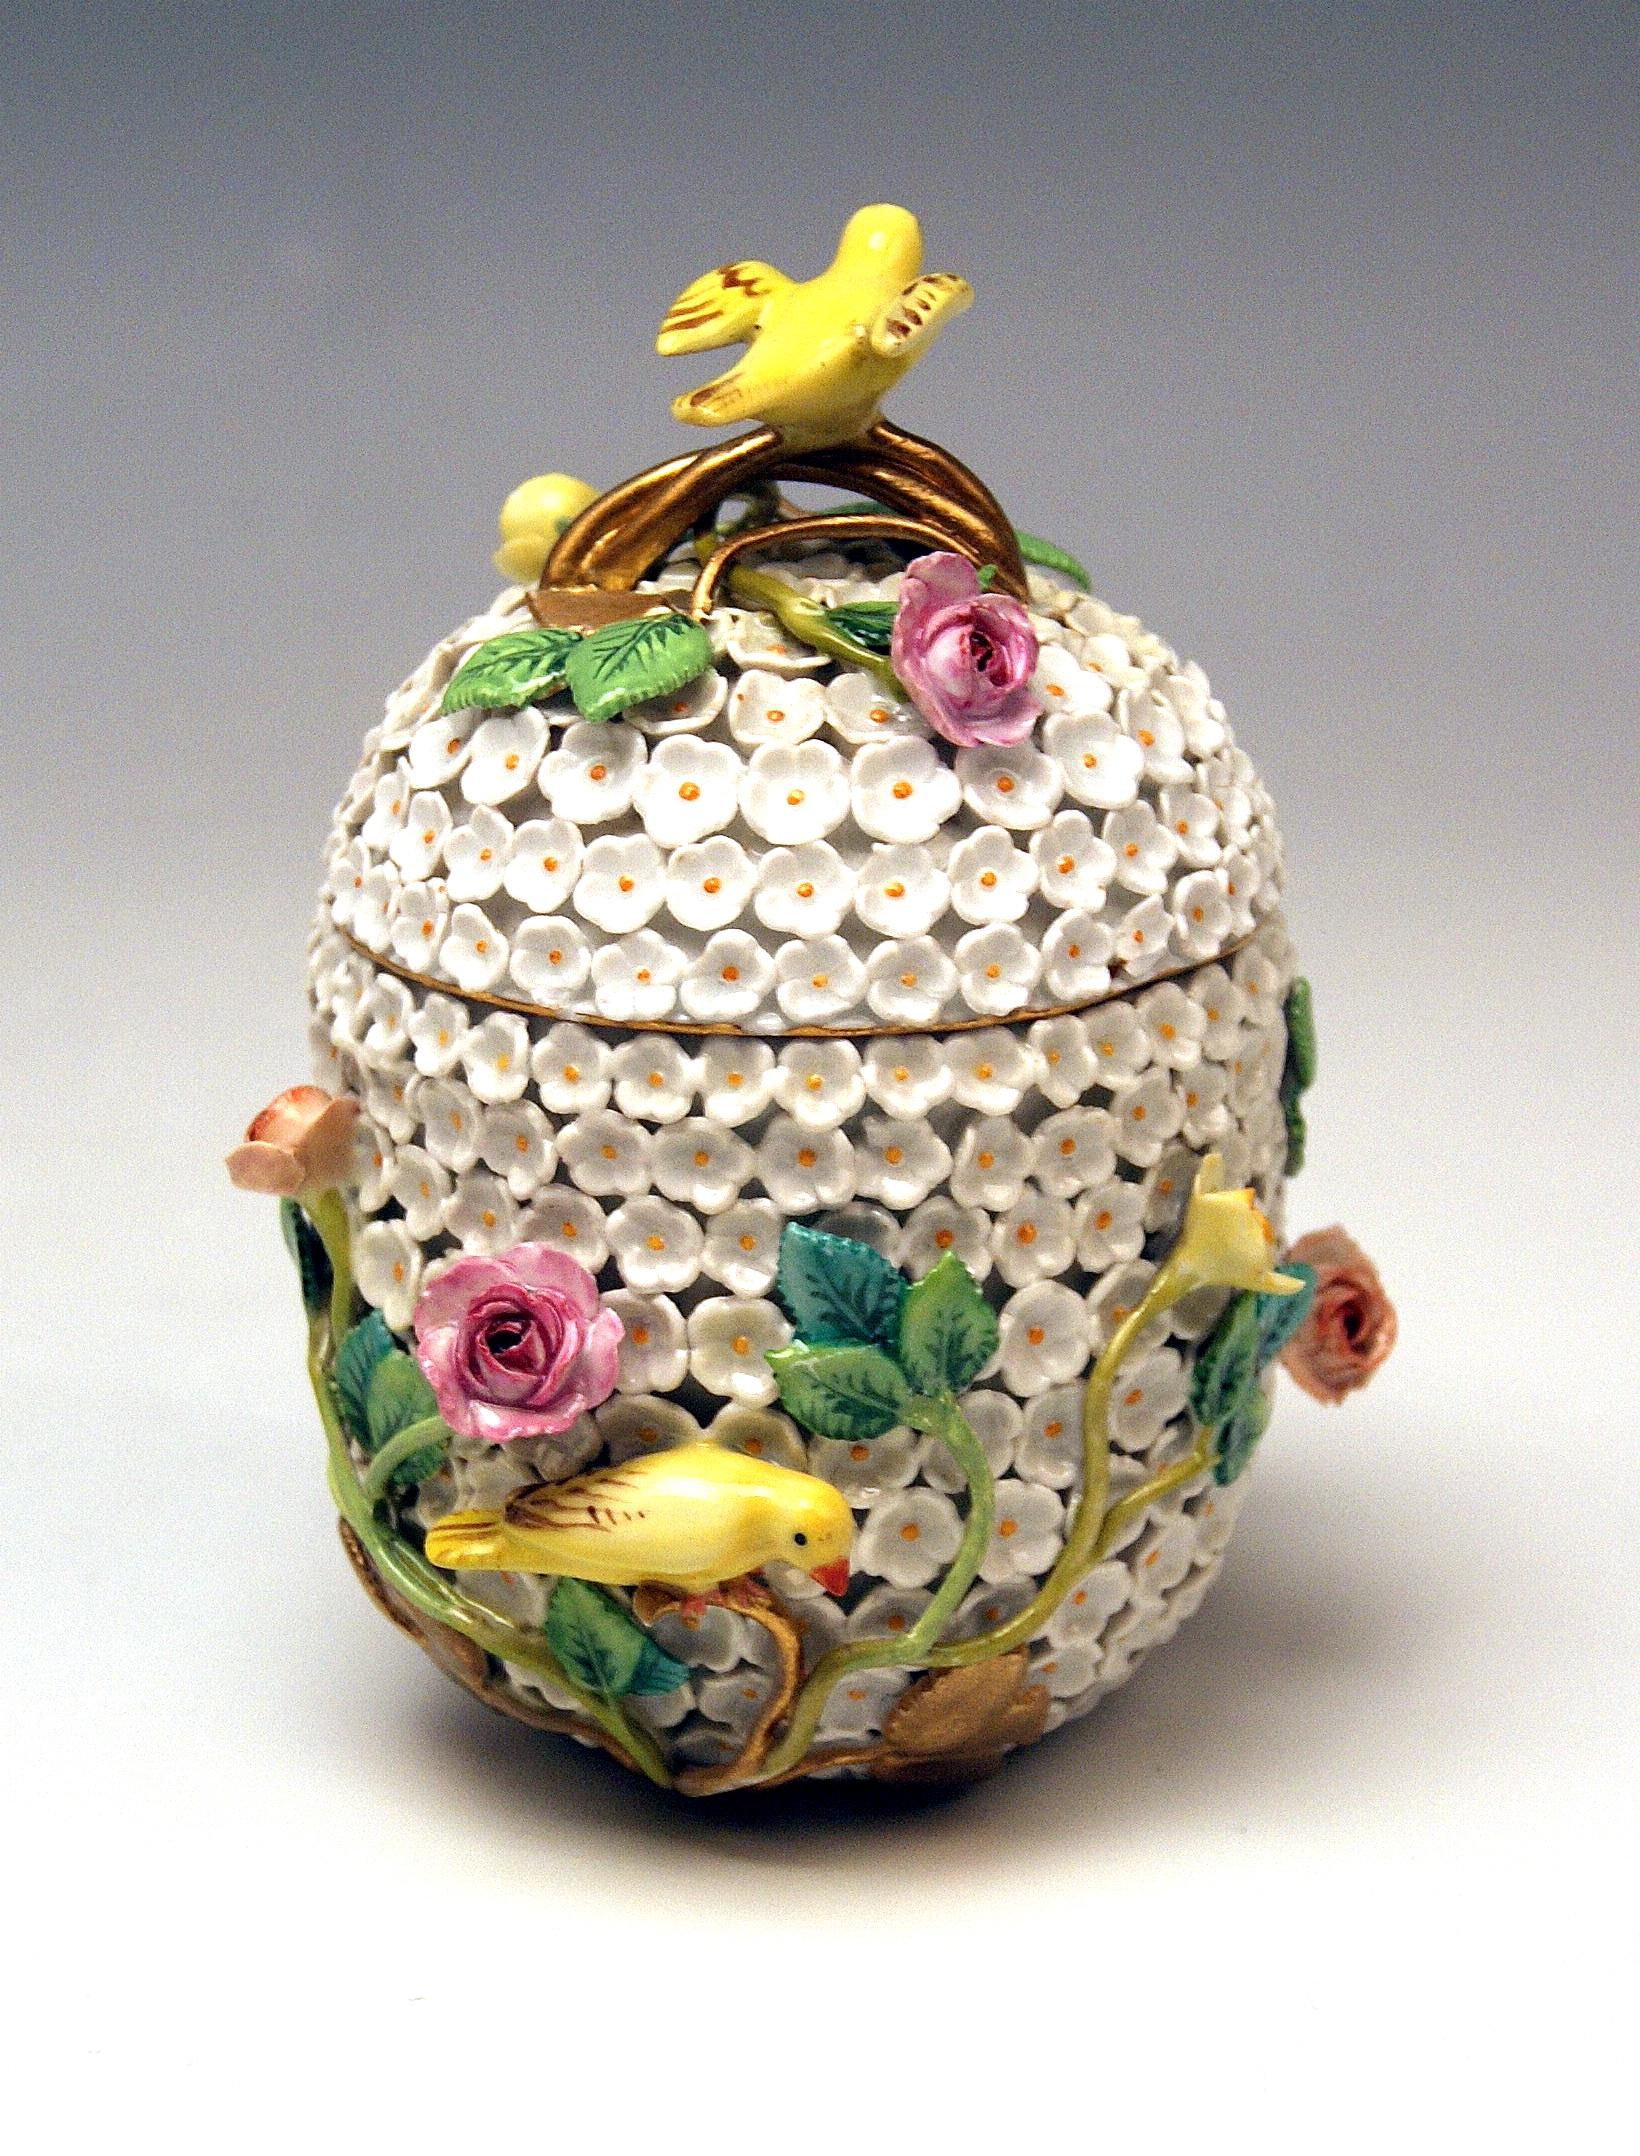 Porcelain Meissen Lidded Cup Saucer Snowball Pattern Canaries Rose Flowers